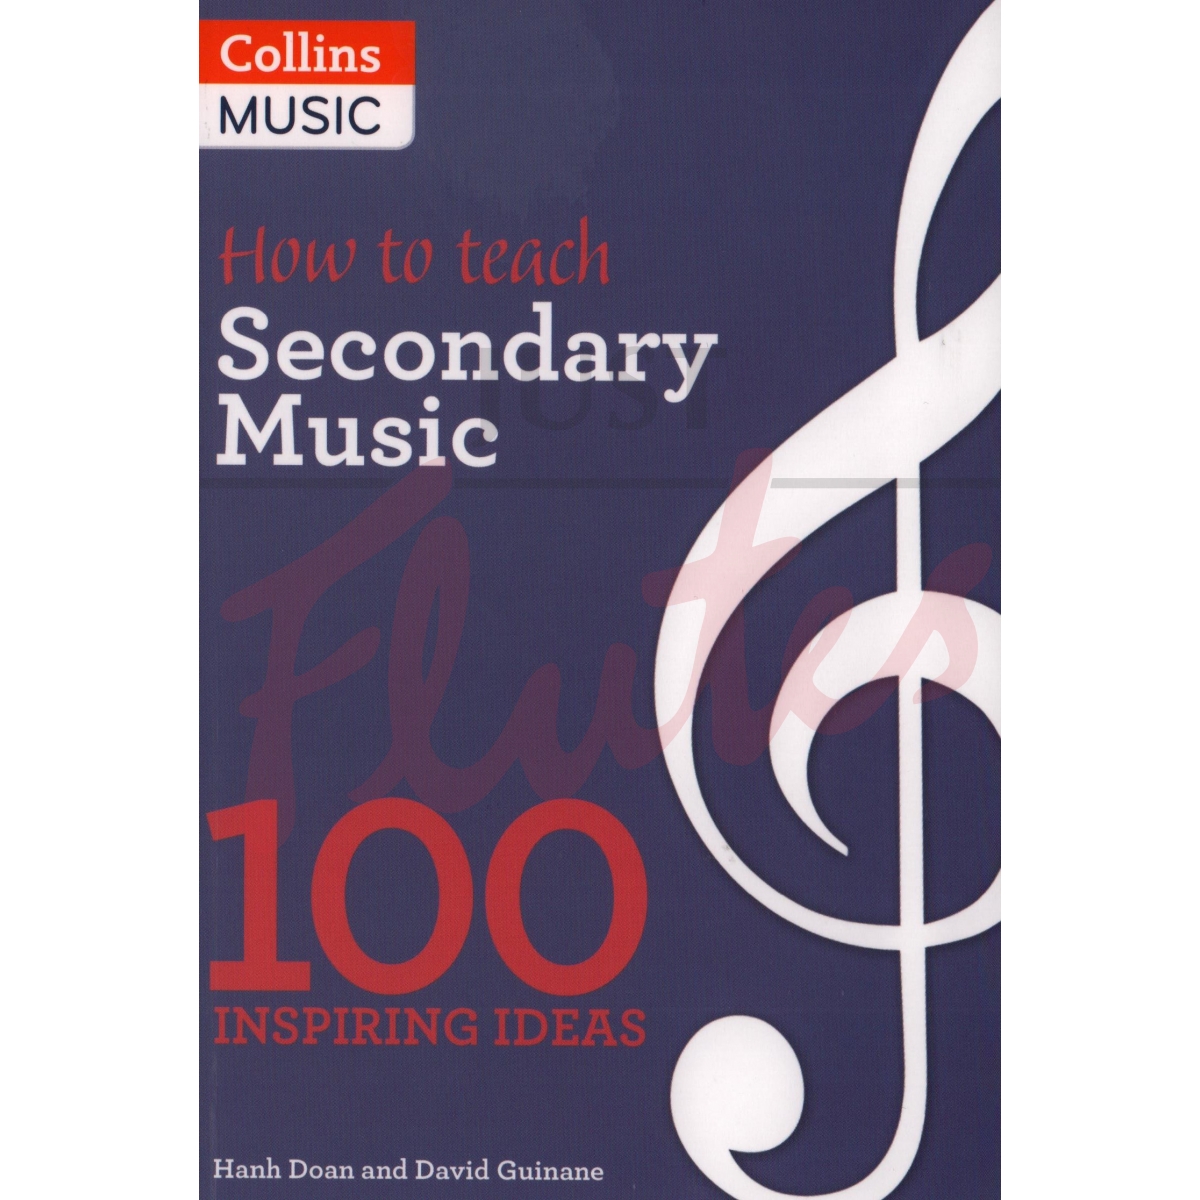 How to Teach Secondary Music - 100 Inspiring Ideas